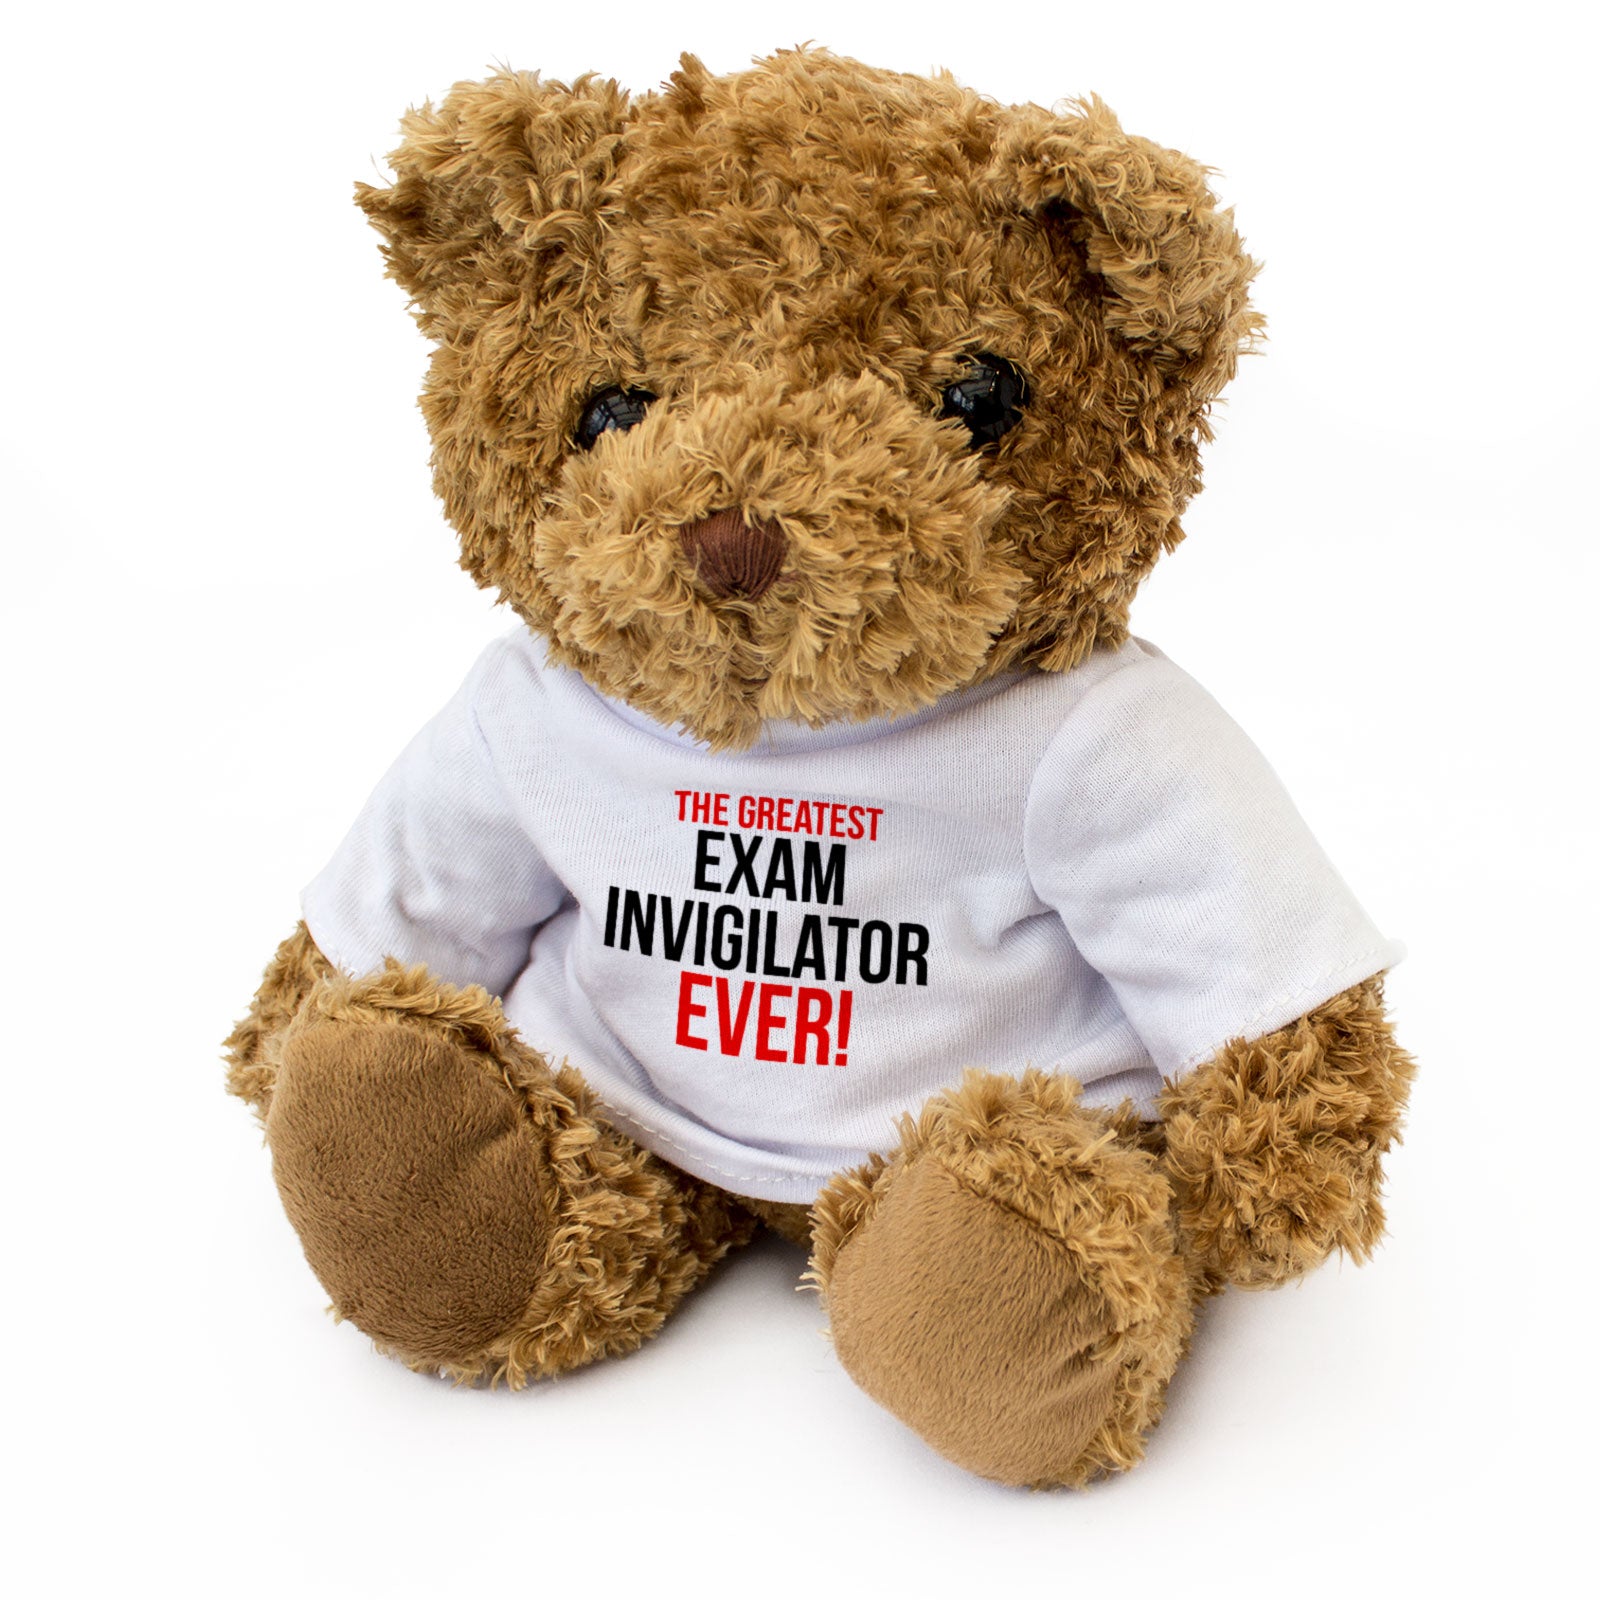 The Greatest Exam Invigilator Ever - Teddy Bear